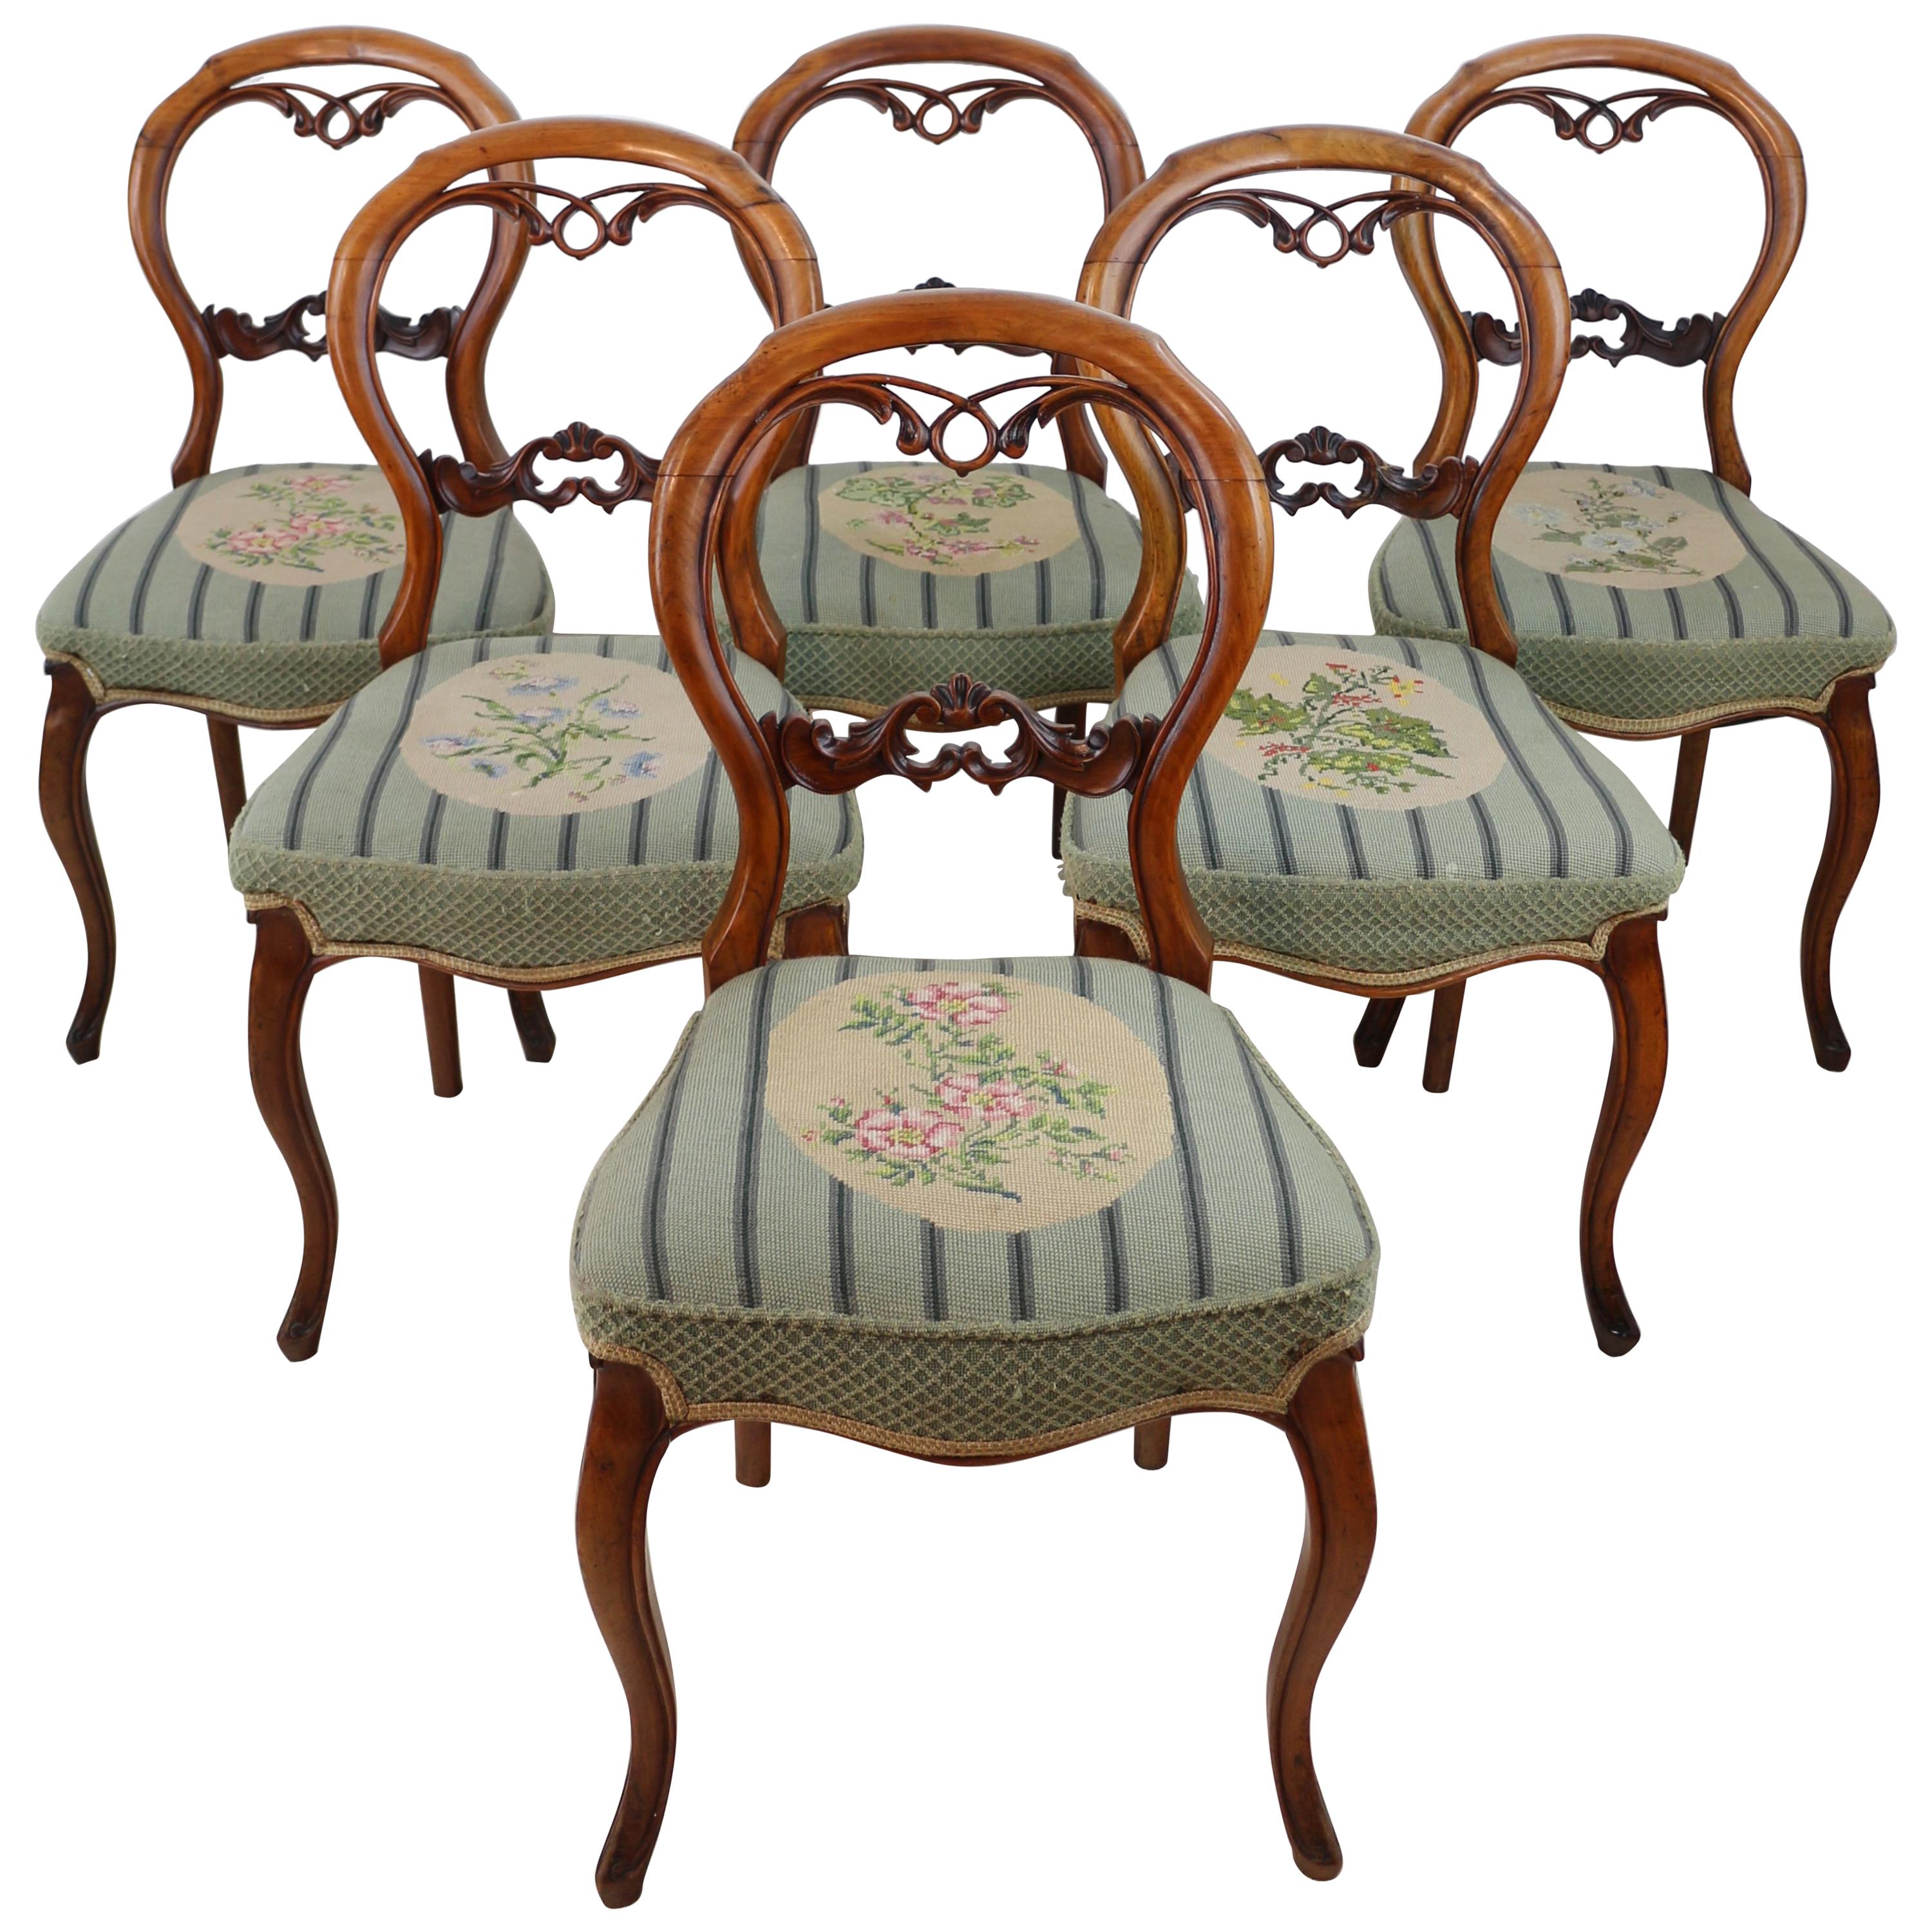 Set of 6 Antique English Victorian Walnut Balloon Back Dining Chairs, circa 1860